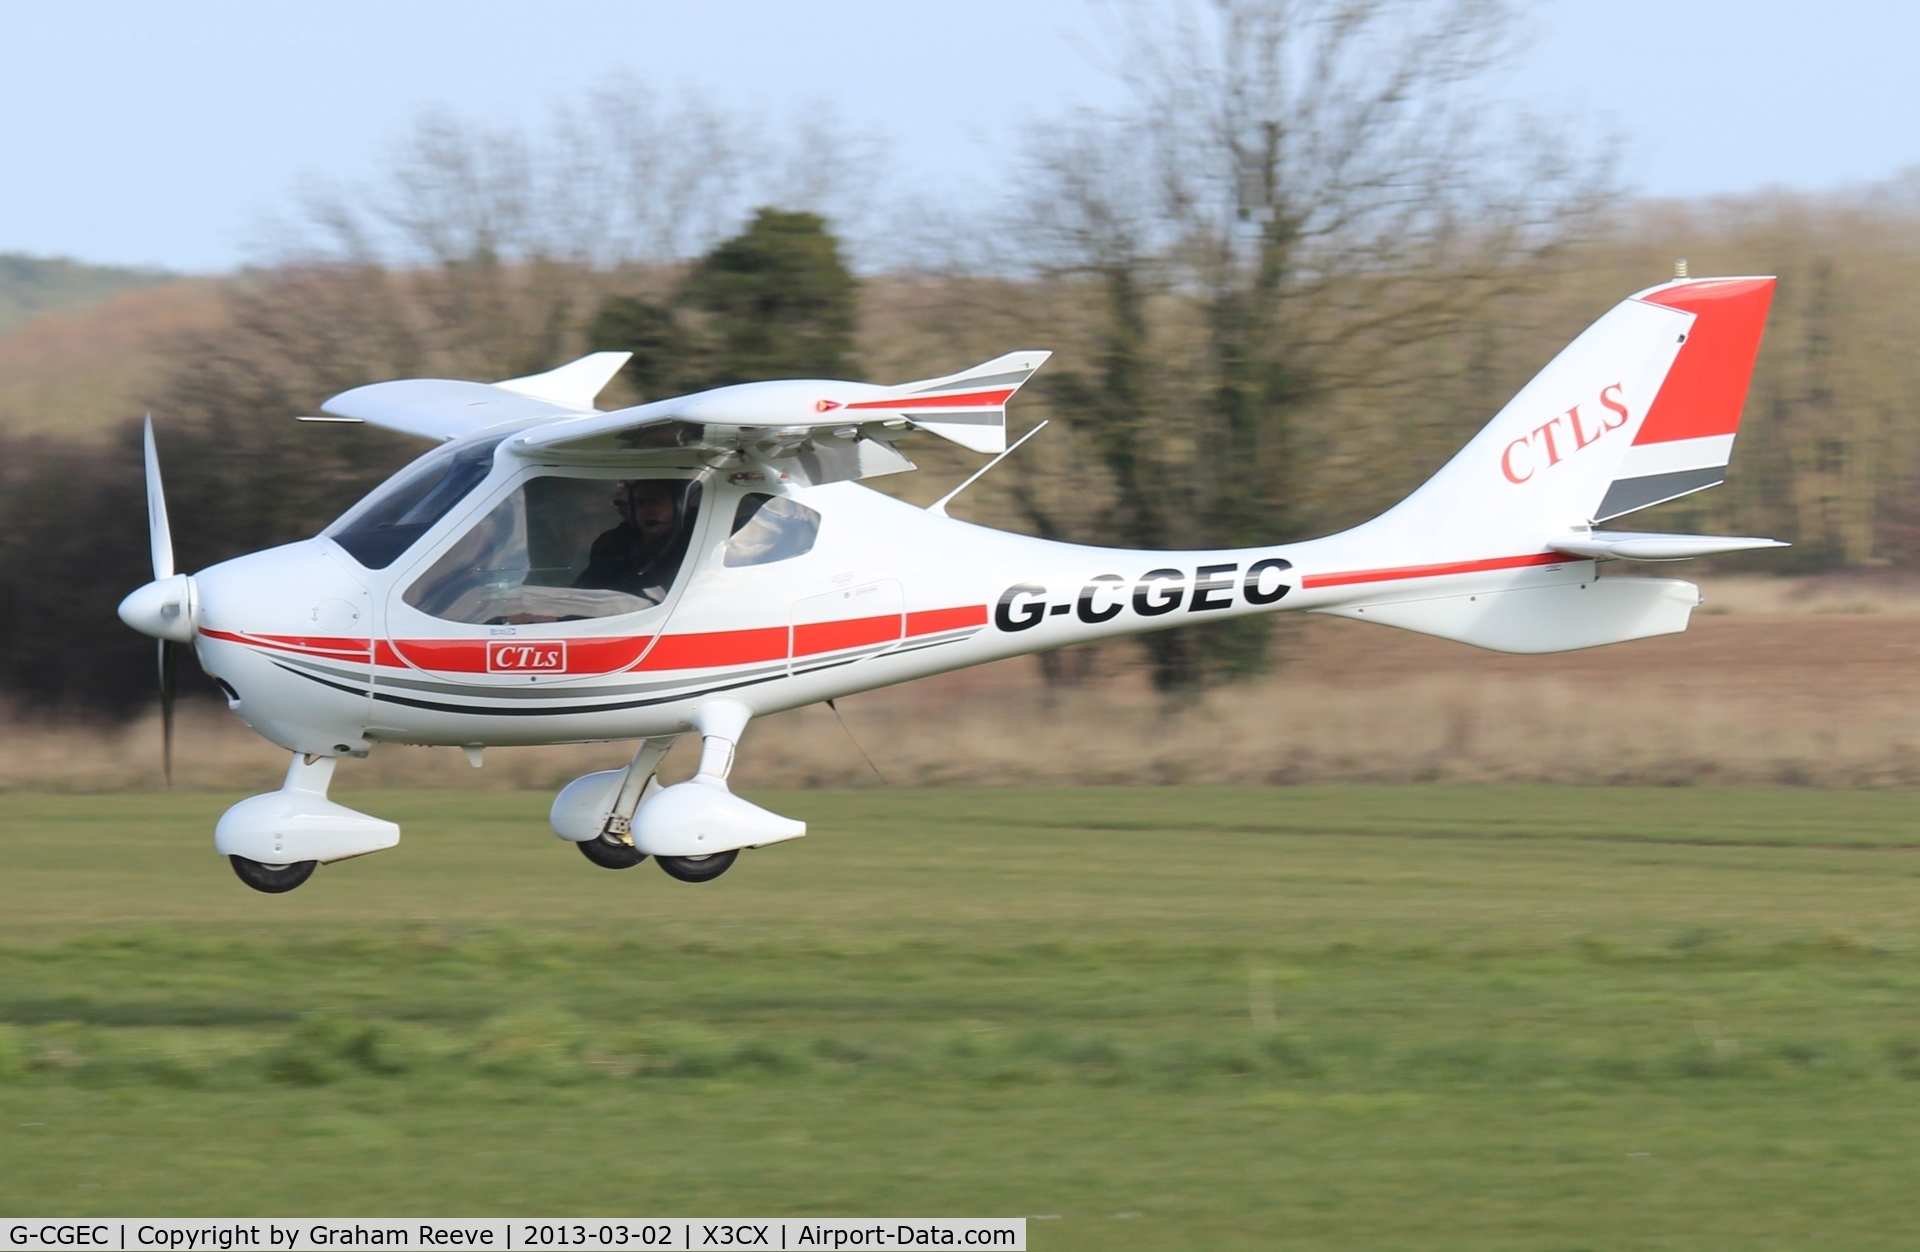 G-CGEC, 2009 Flight Design CTLS C/N F-09-02-12, About to land.